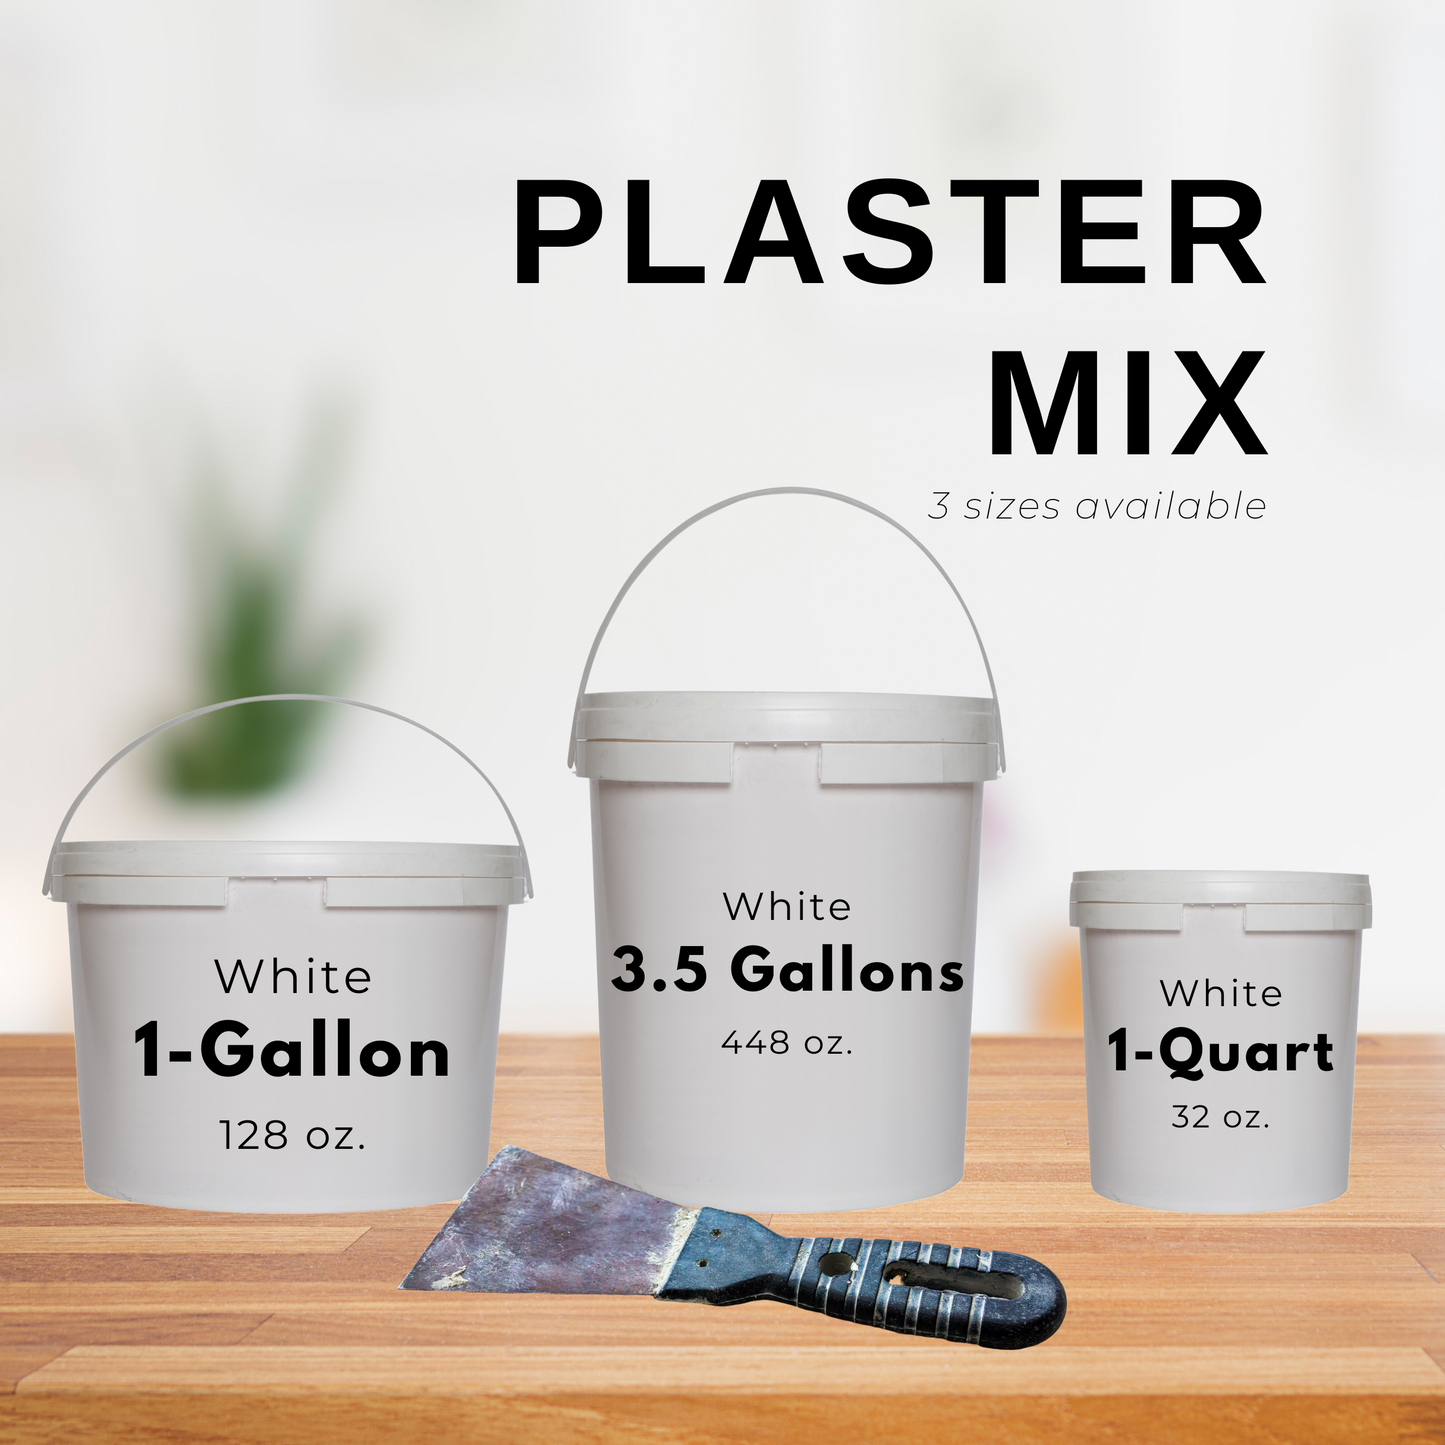 Plaster Mix